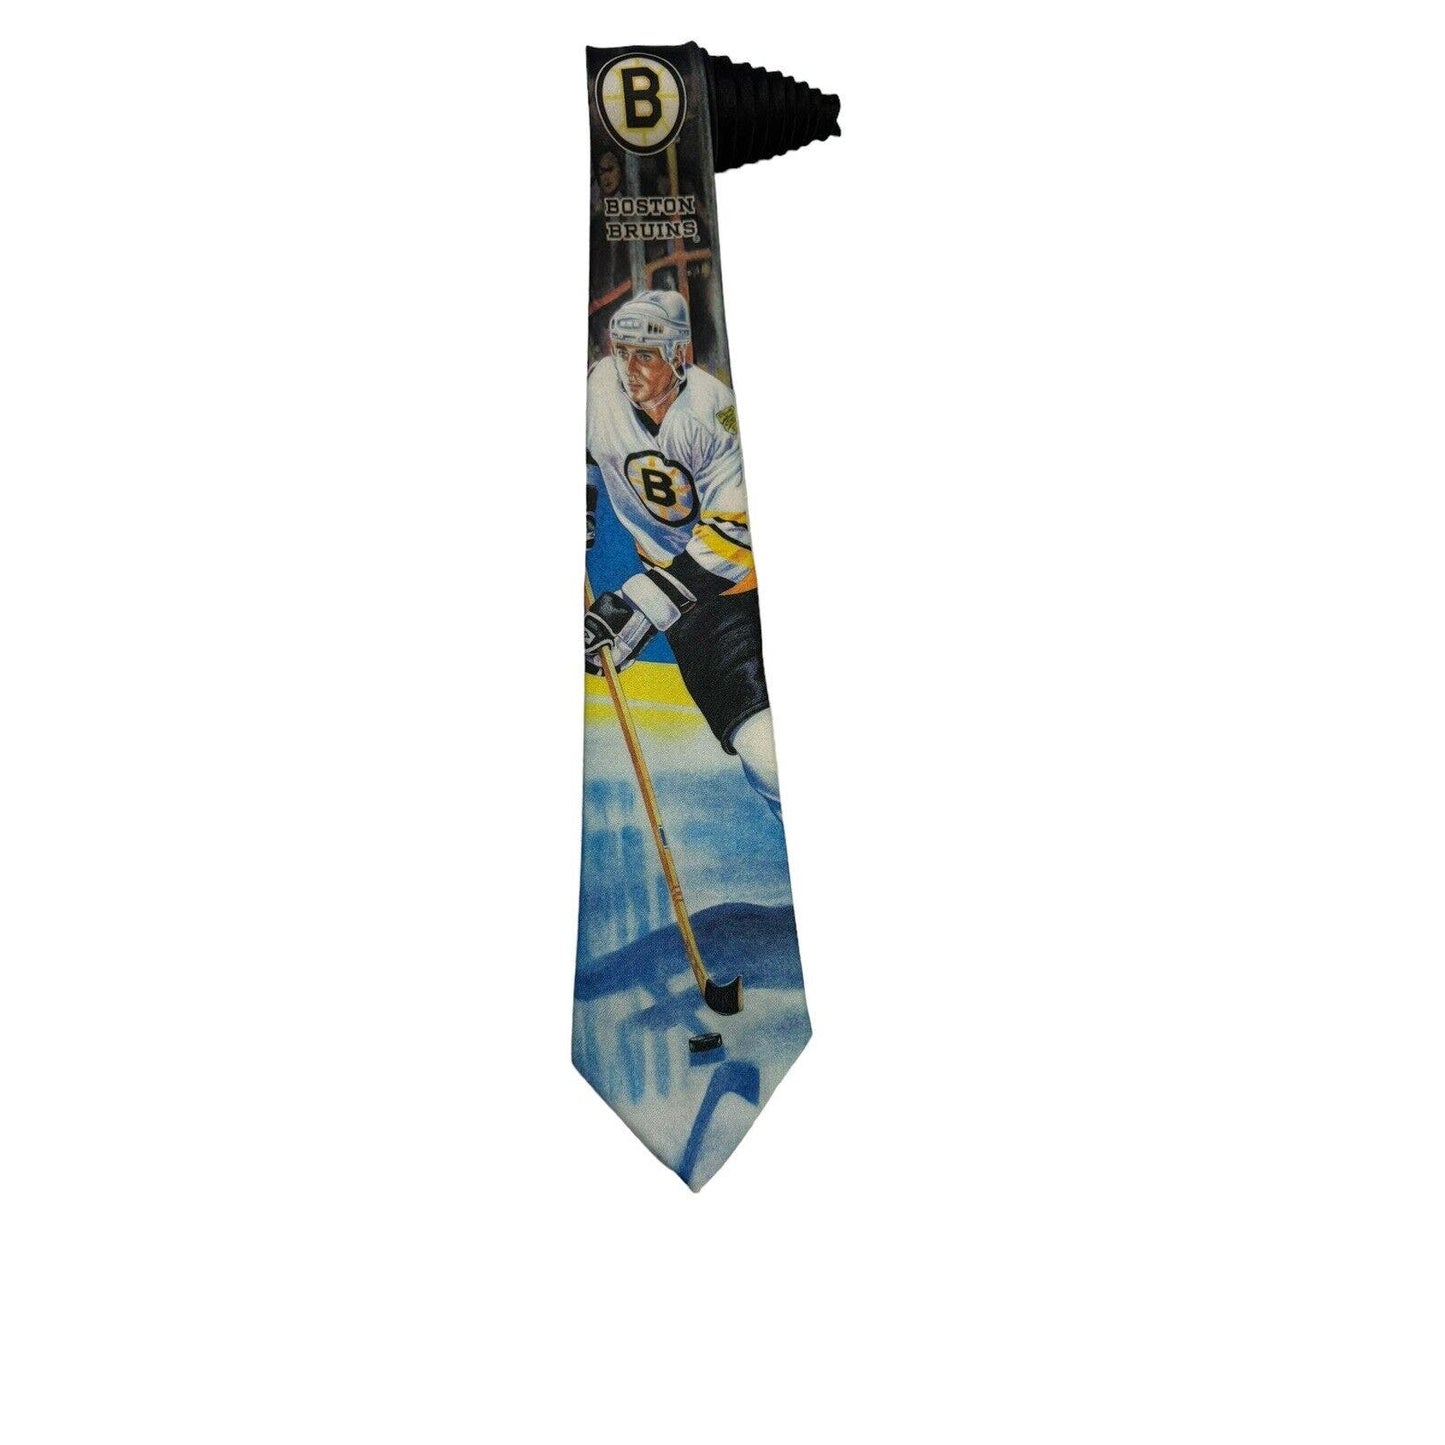 Ralph Marlin NHL Boston Bruins Hockey Player 1991 Novelty Vintage Necktie